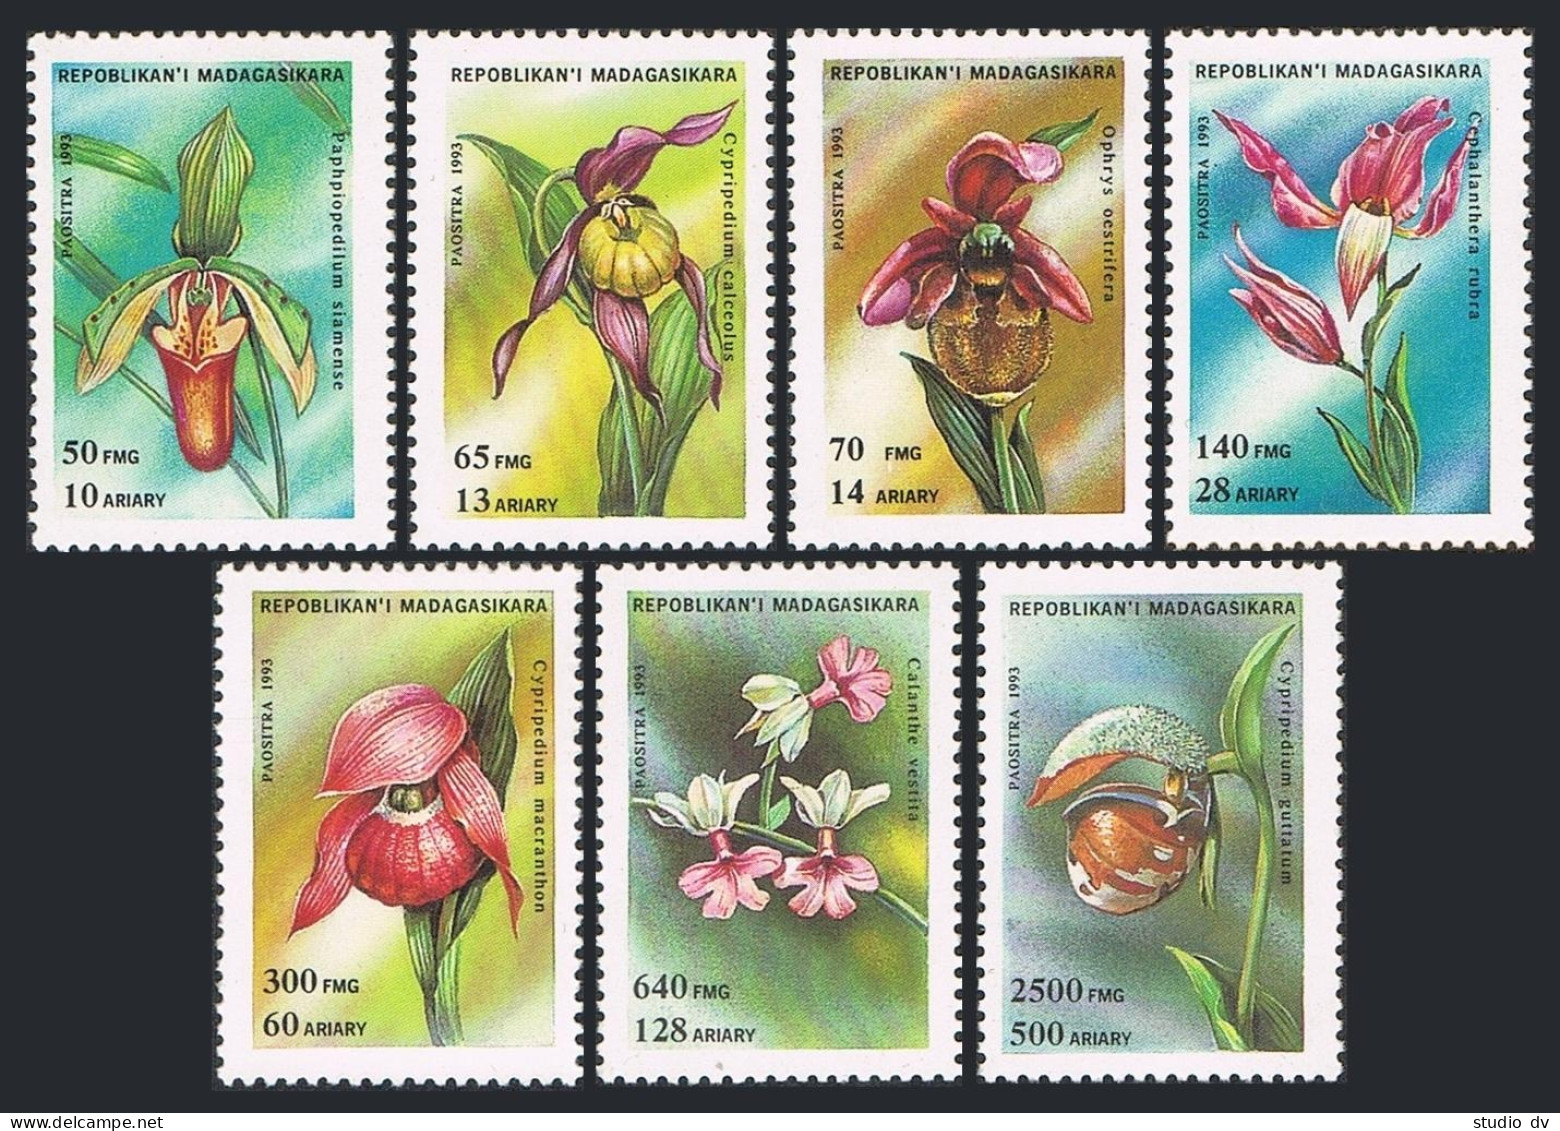 Malagasy 1272-1278,1279,MNH.Michel 1570-1576,Bl.239. Orchids,1993. - Madagascar (1960-...)